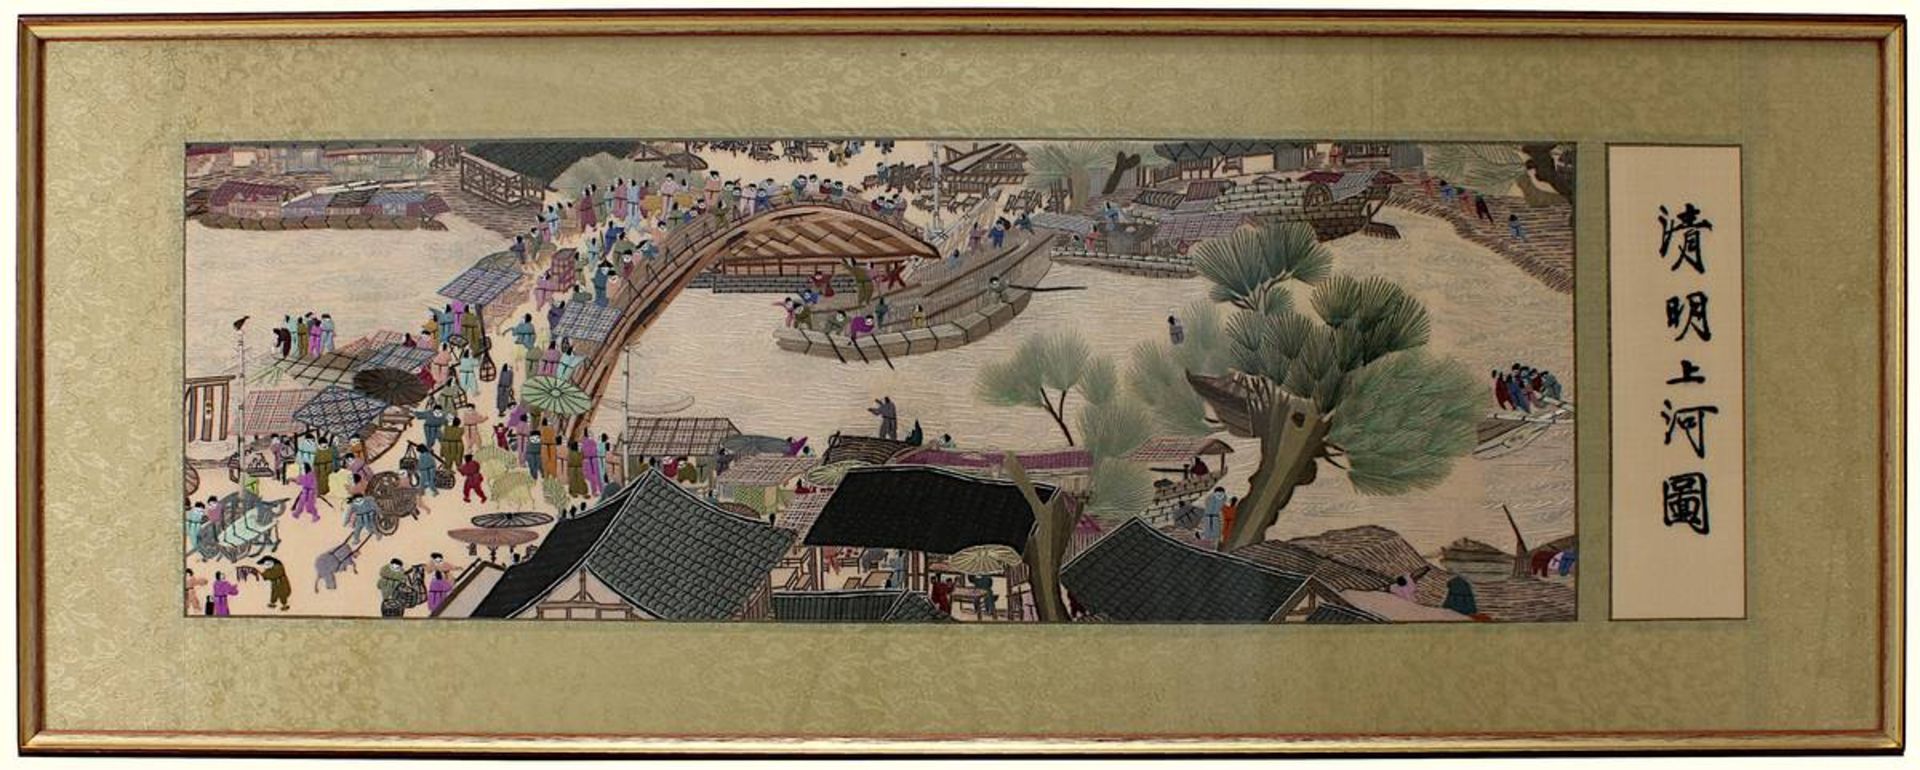 Großes Stickbild, China 2. H. 20. Jh., "Qingmin Shanghe Garten", mit Bogenbrücke, Dschunken,